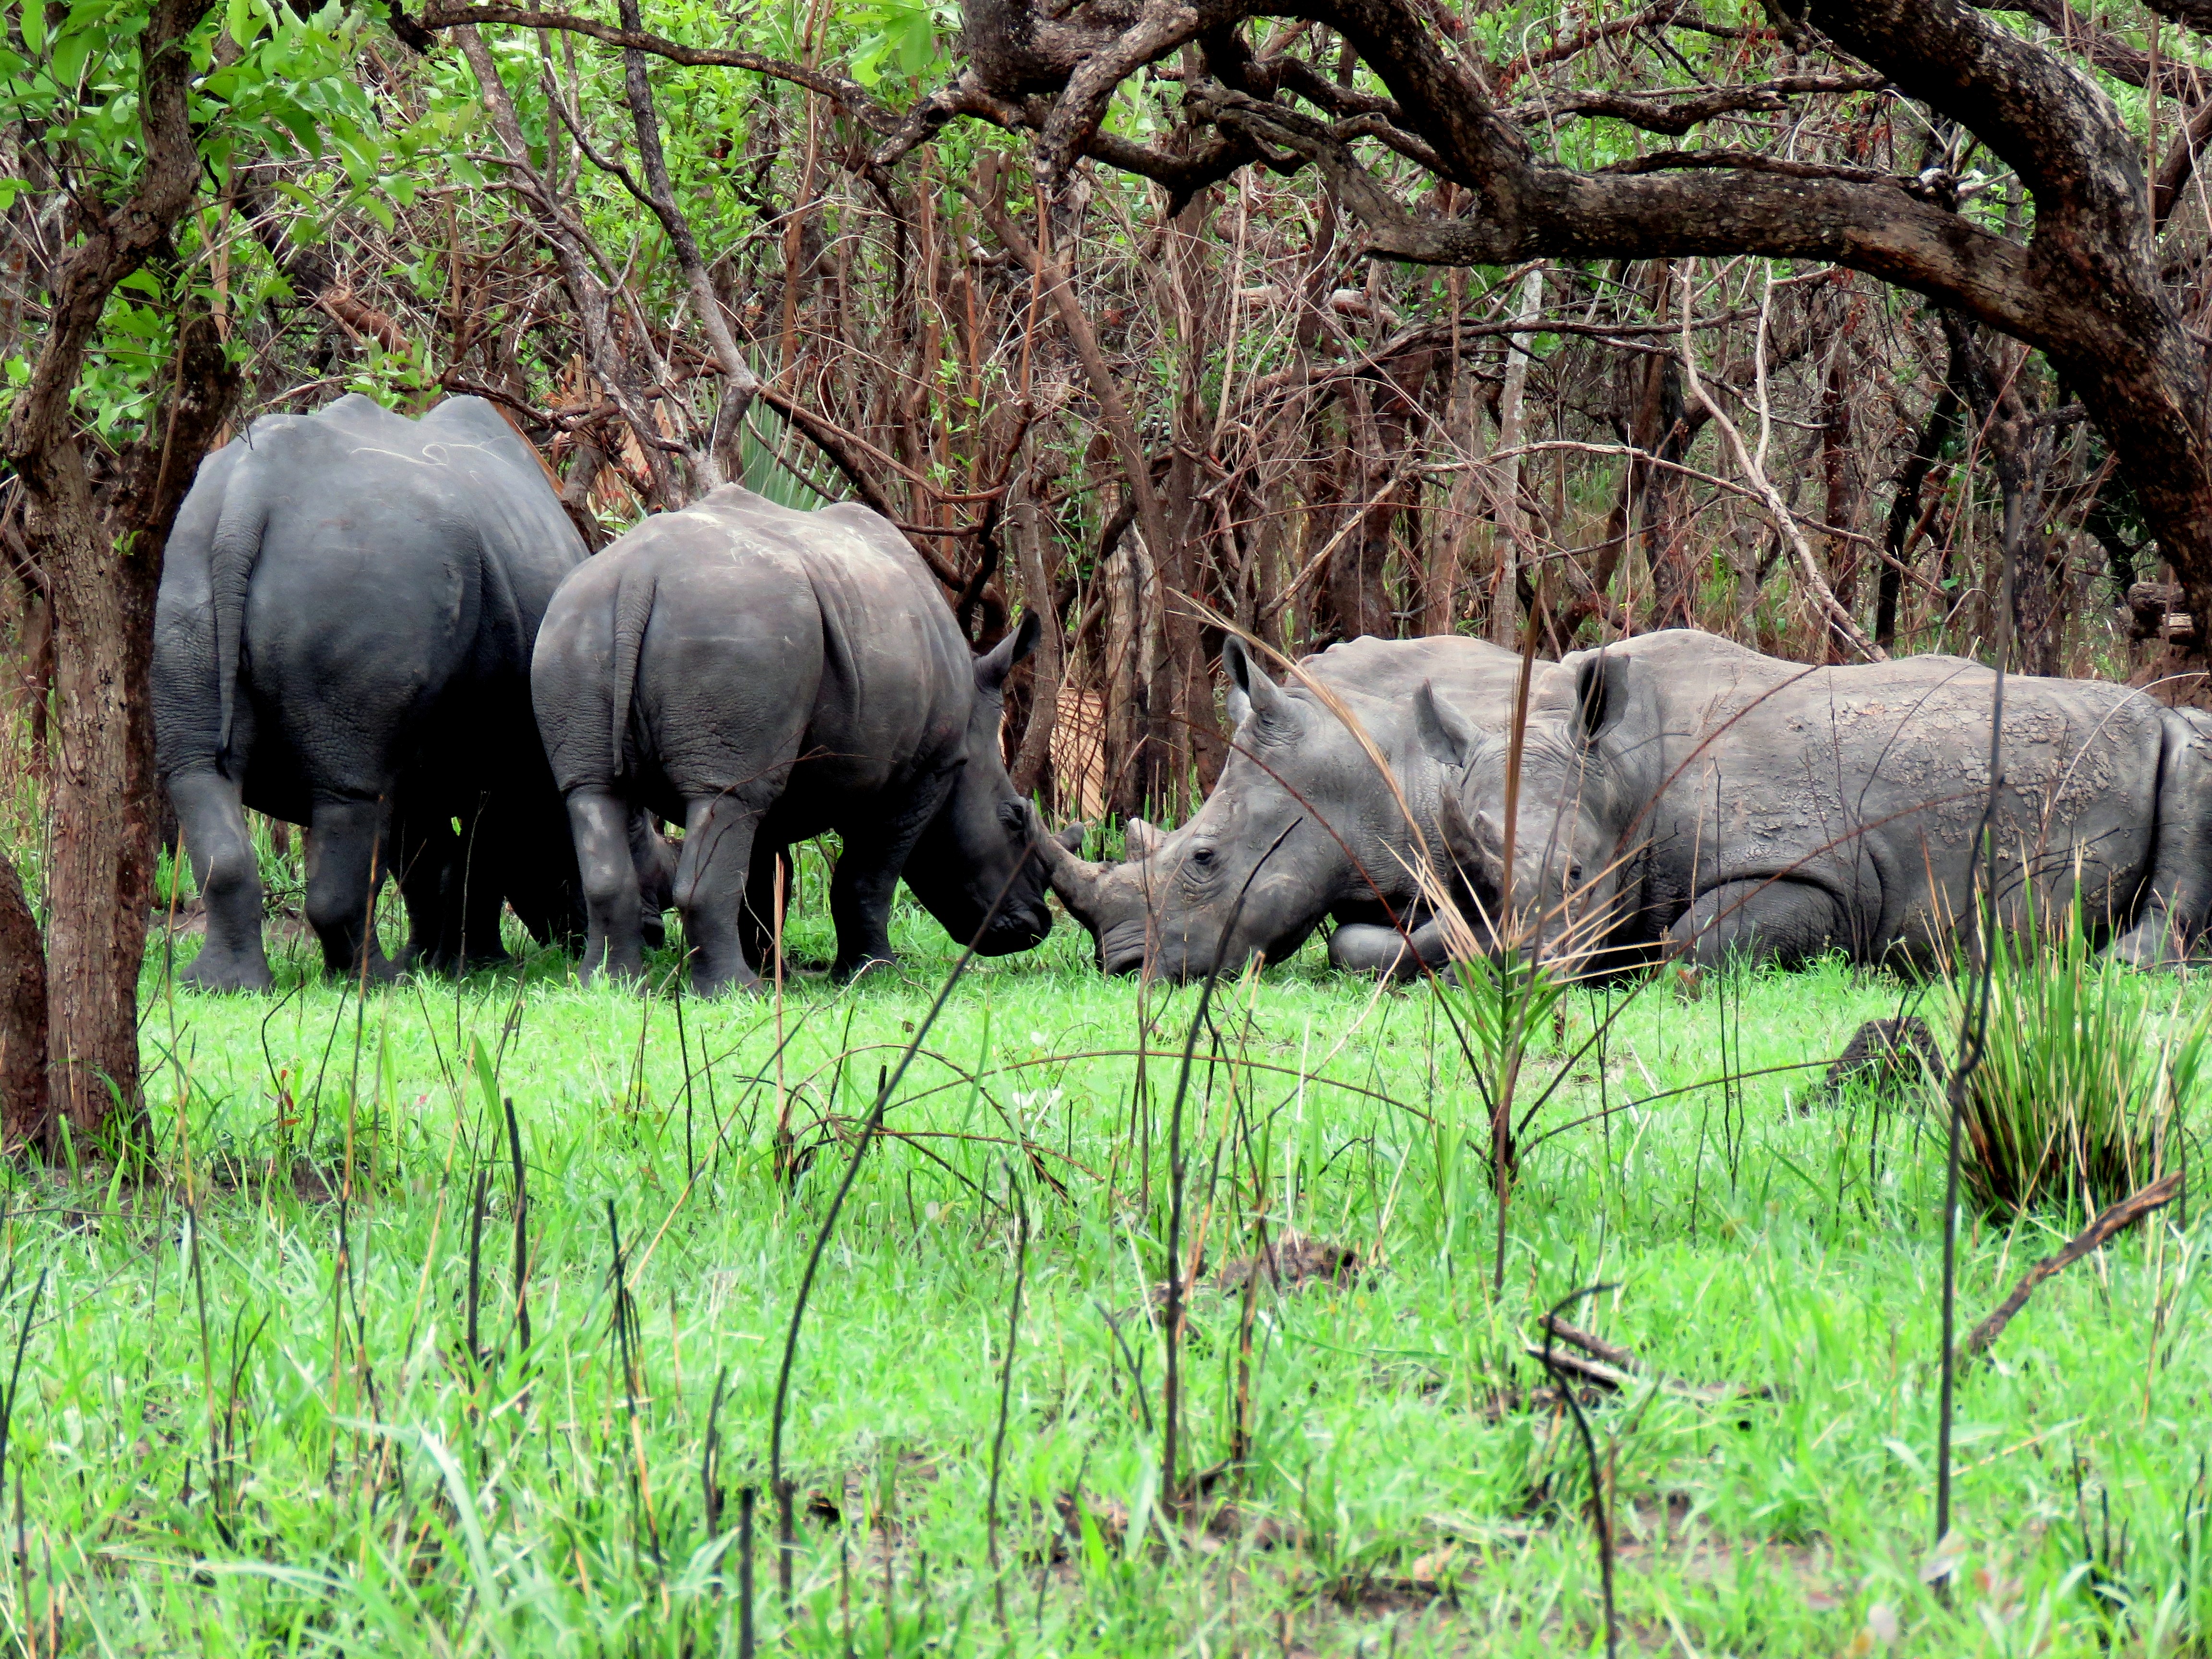 1 Day Rhino Tracking Tour - White Rhinos at Ziwa Rhino Sanctuary